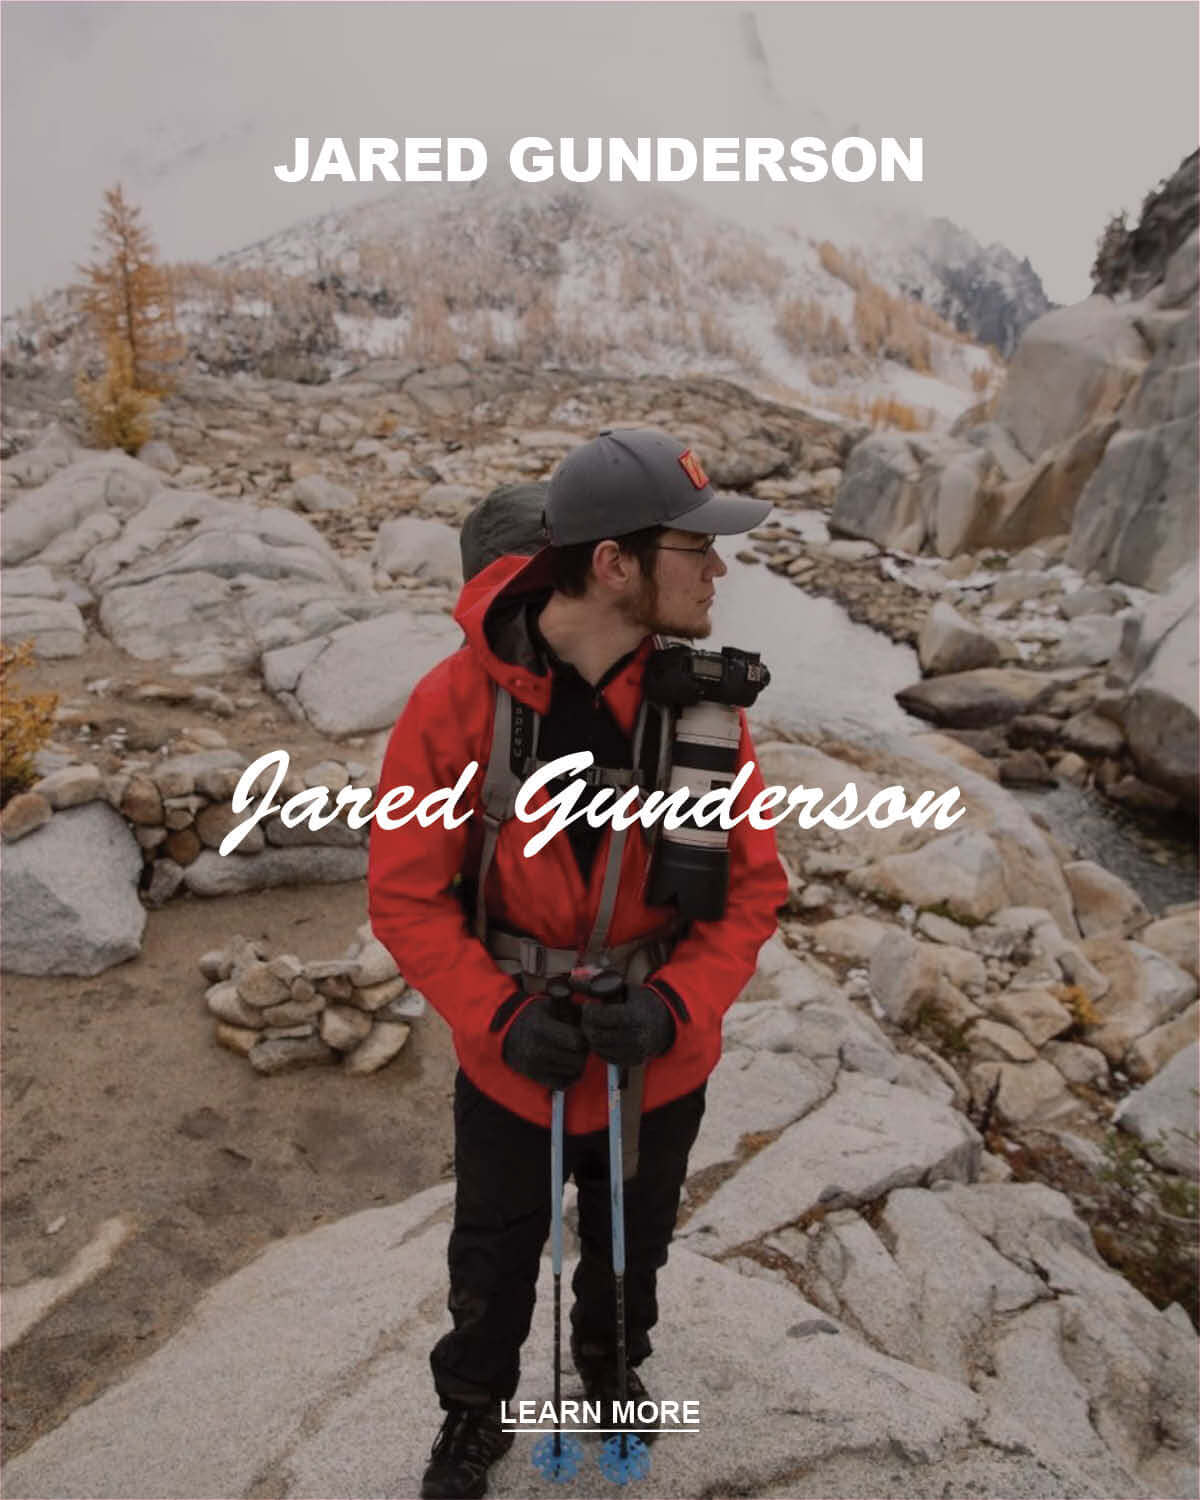 Jared Q. Gunderson - Image #1